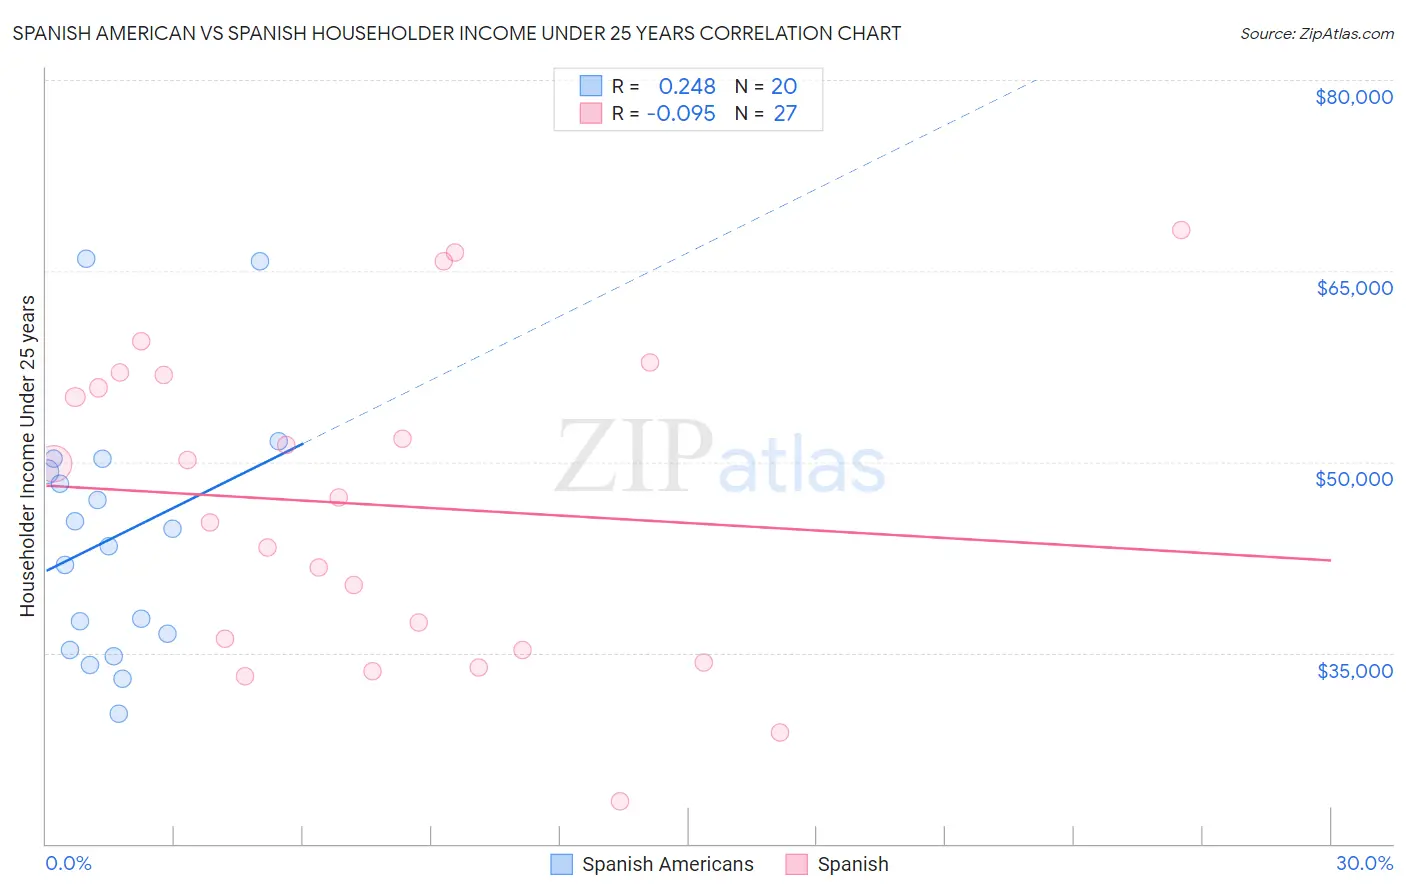 Spanish American vs Spanish Householder Income Under 25 years